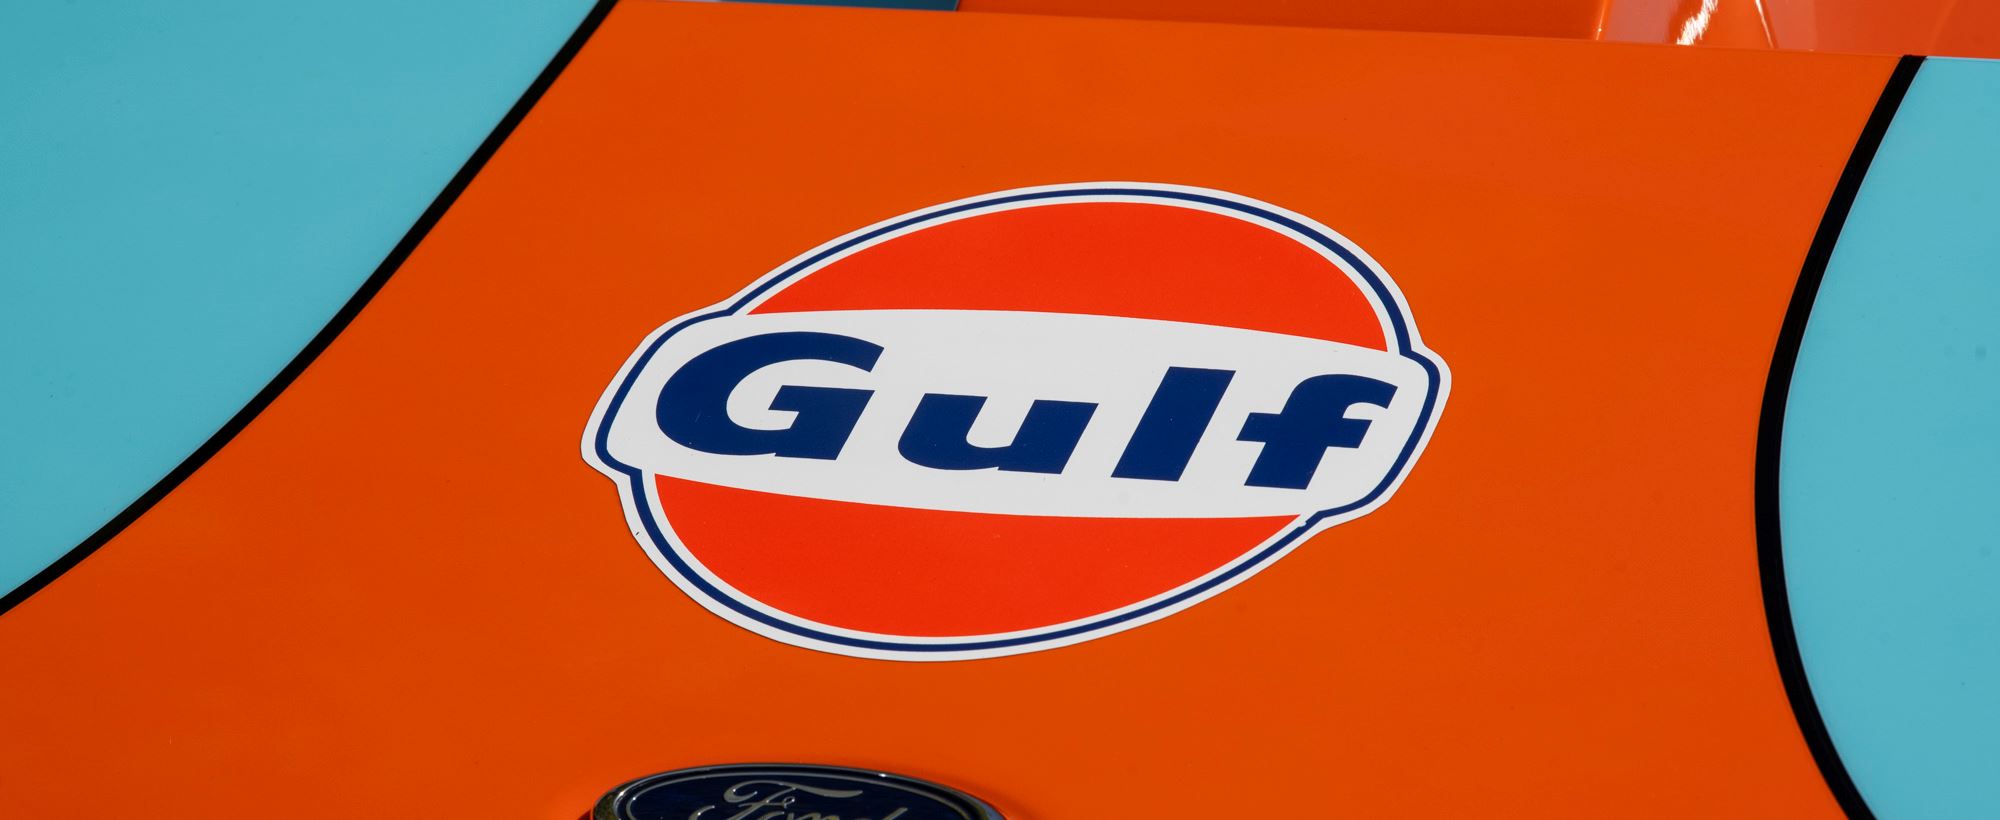 Ford GT Gulf 068.jpg